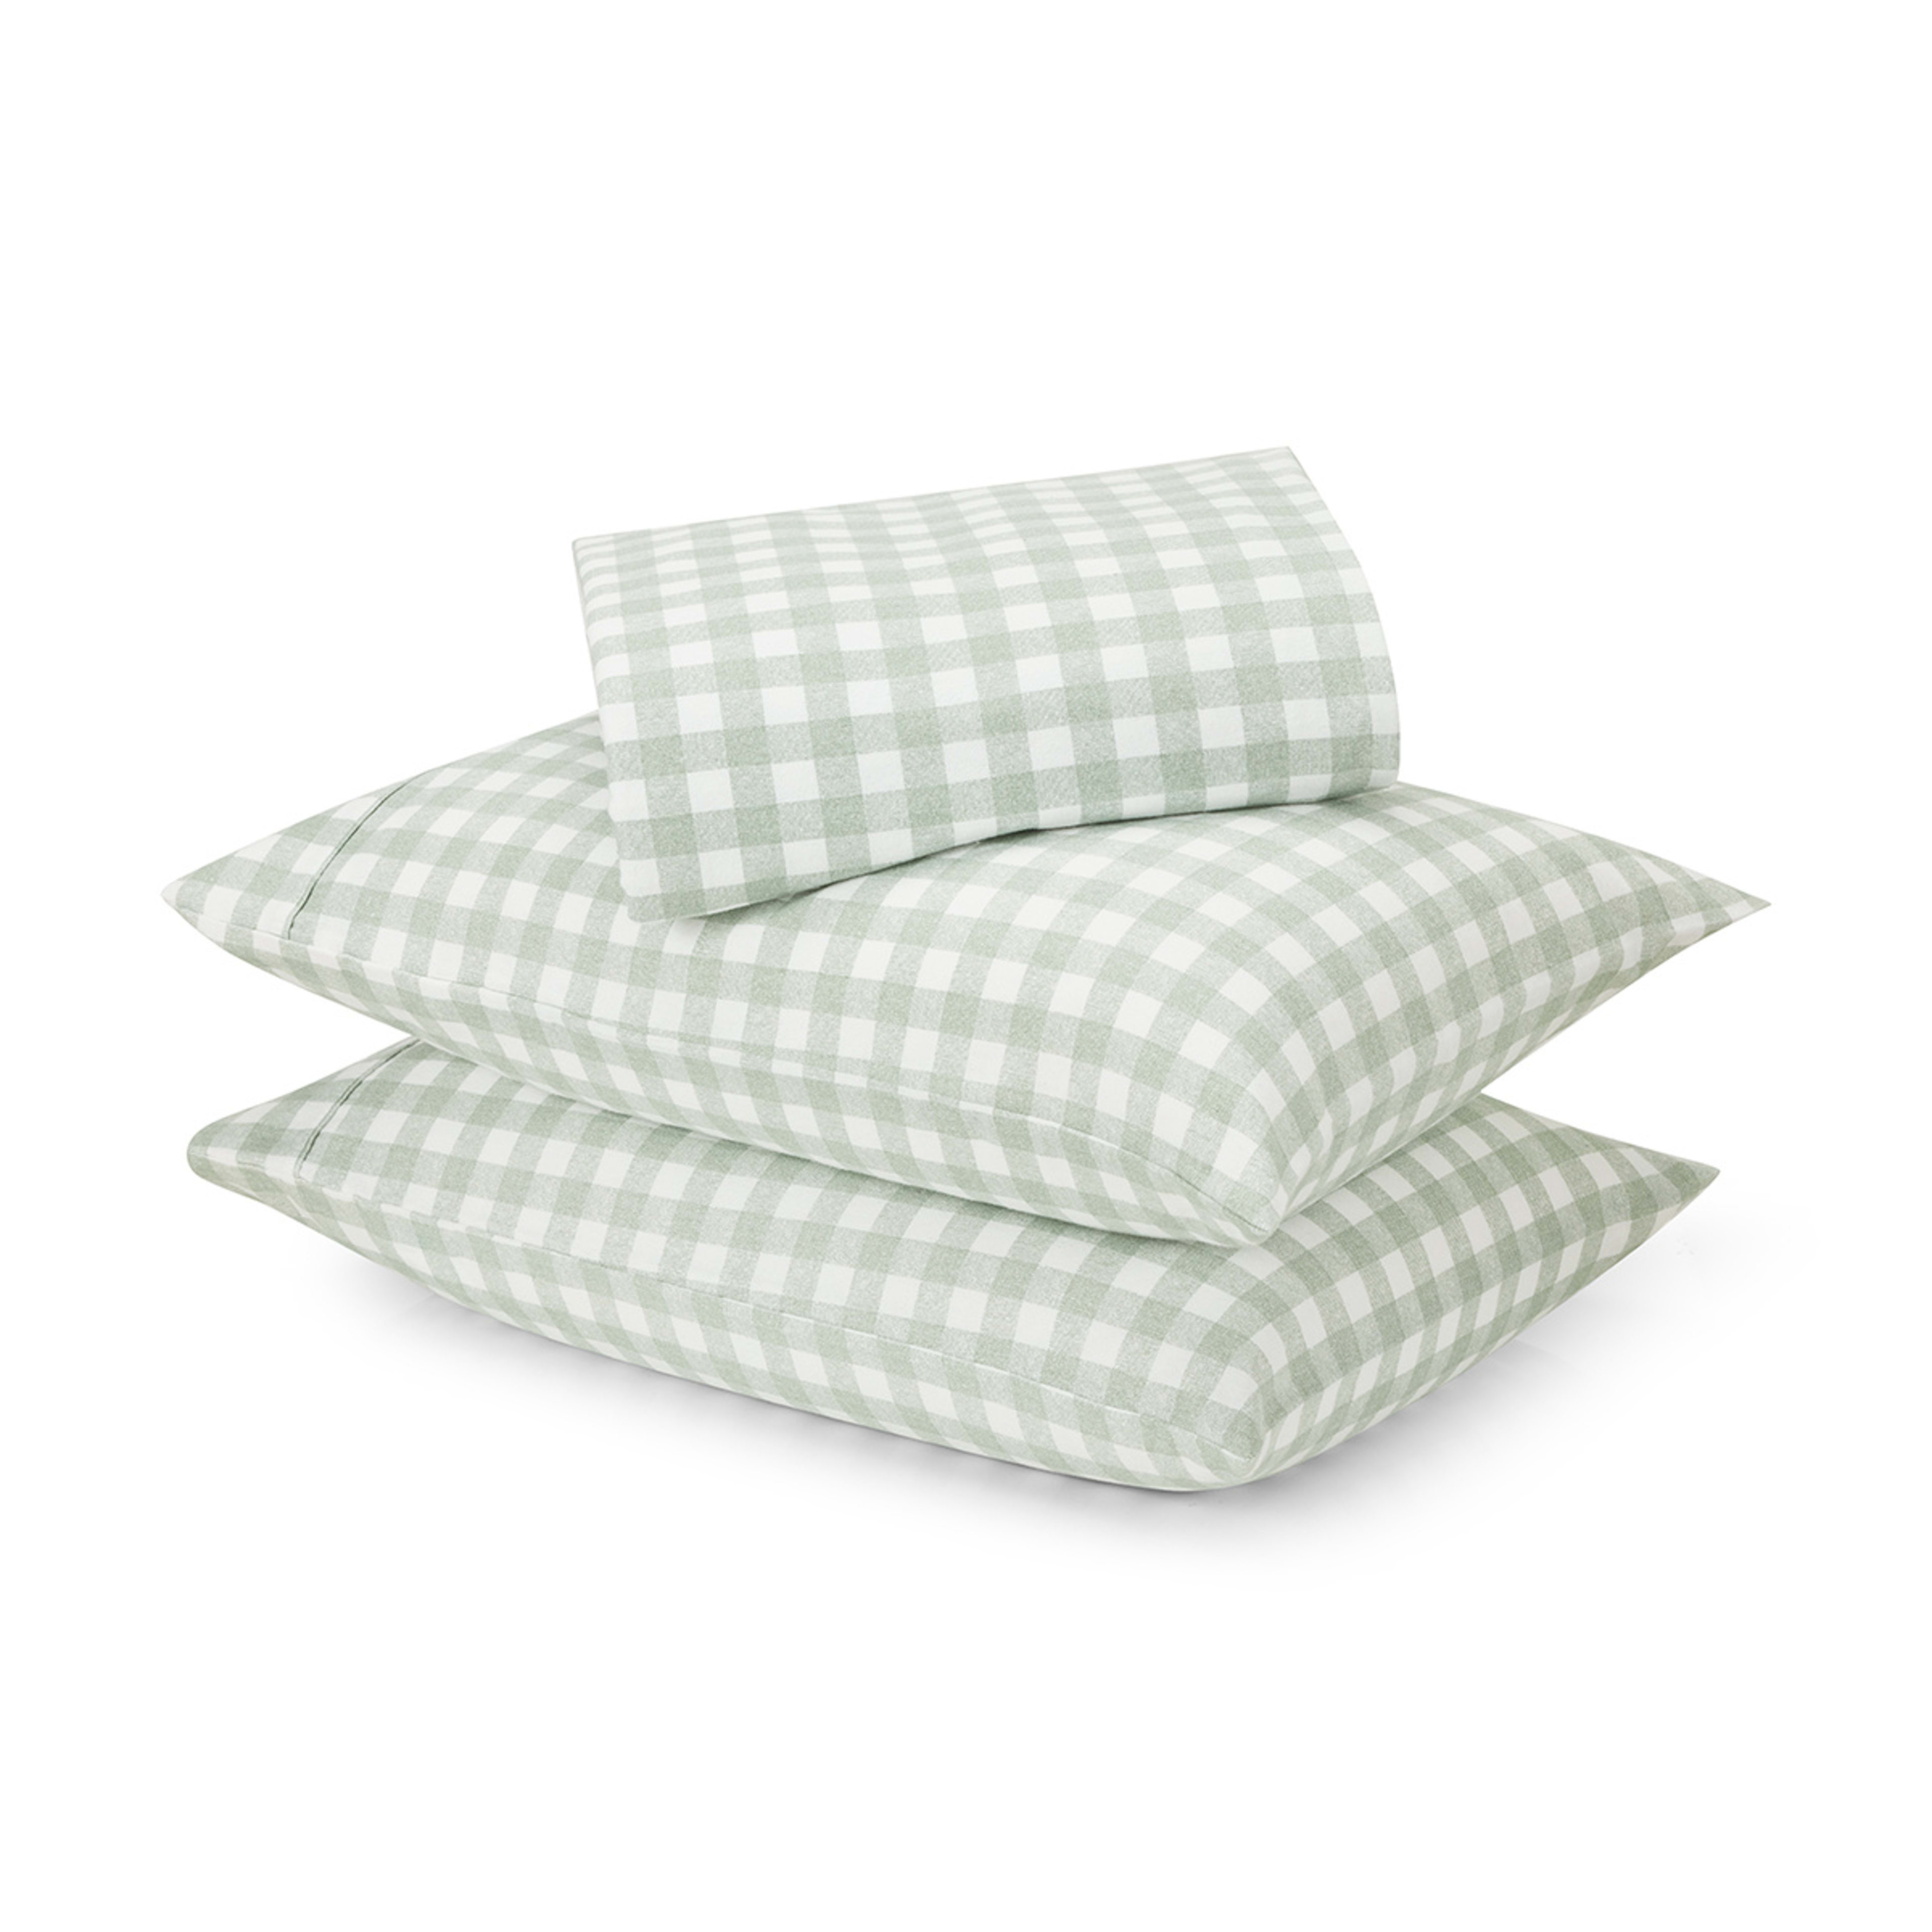 Gingham Cotton Flannelette Sheet Set - Queen Bed, Green